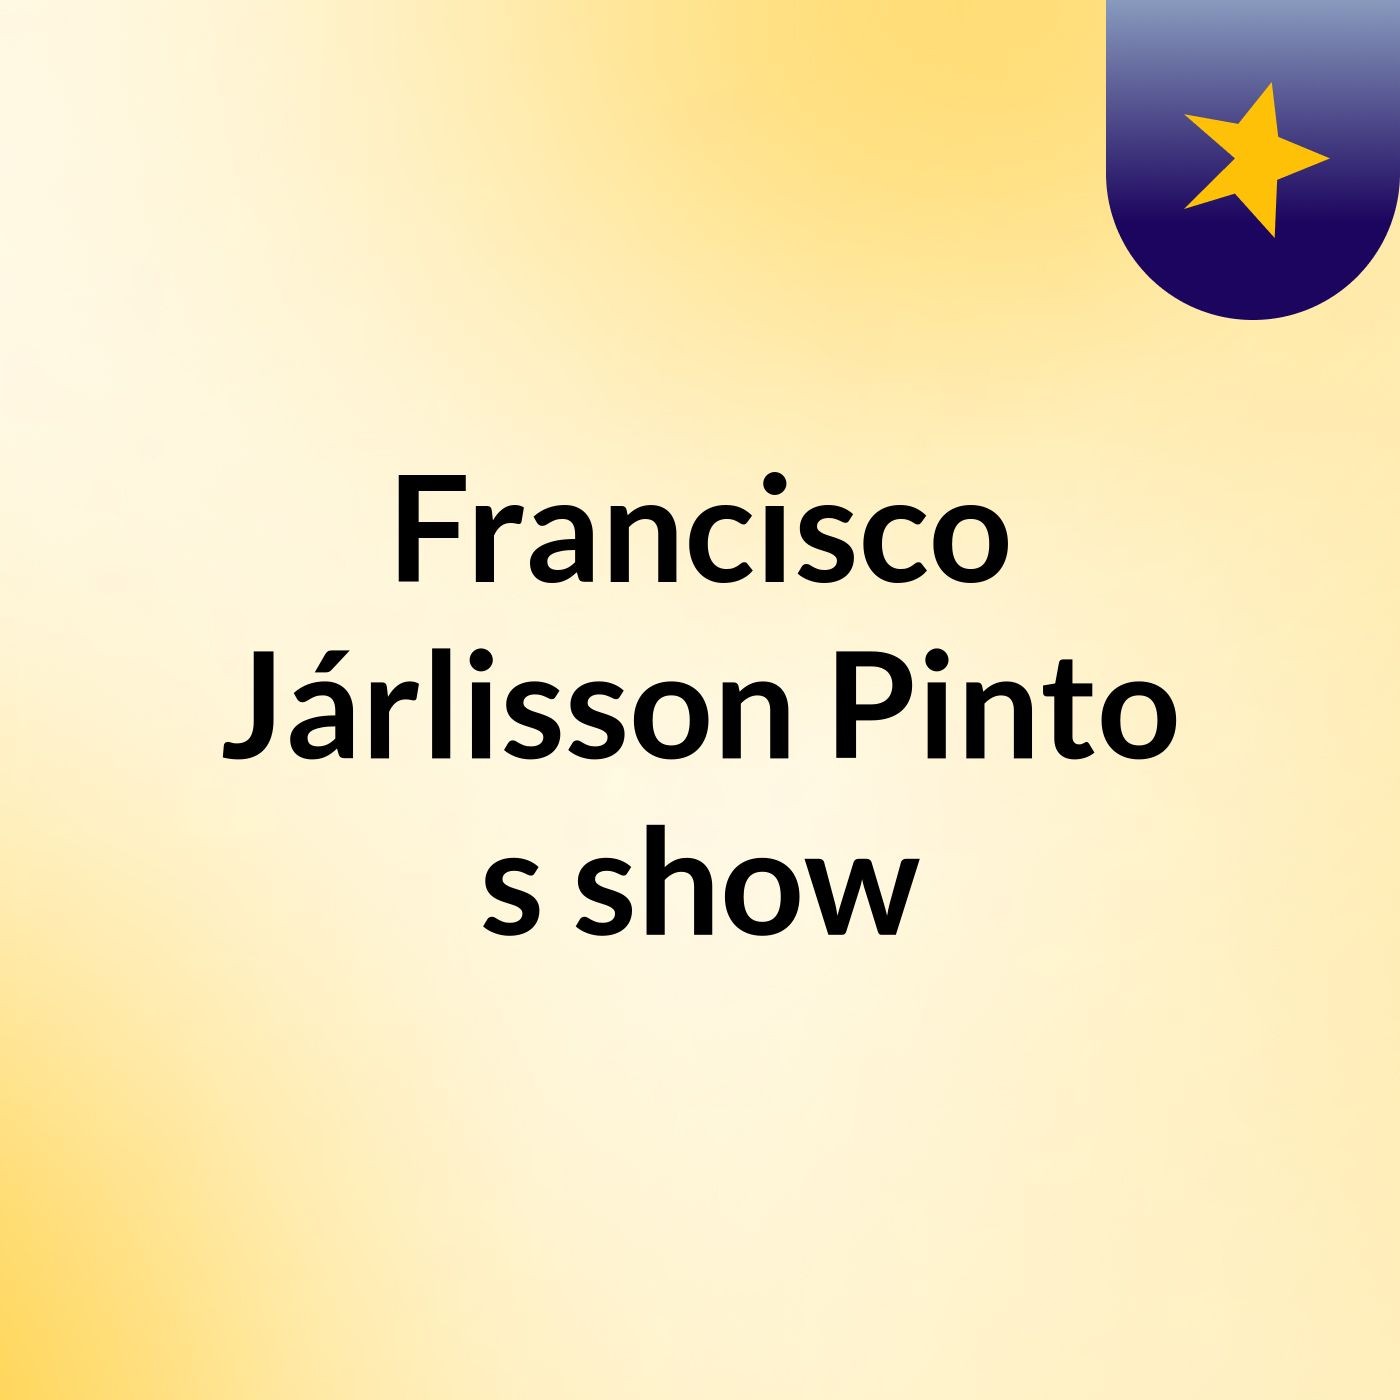 Francisco Járlisson Pinto's show